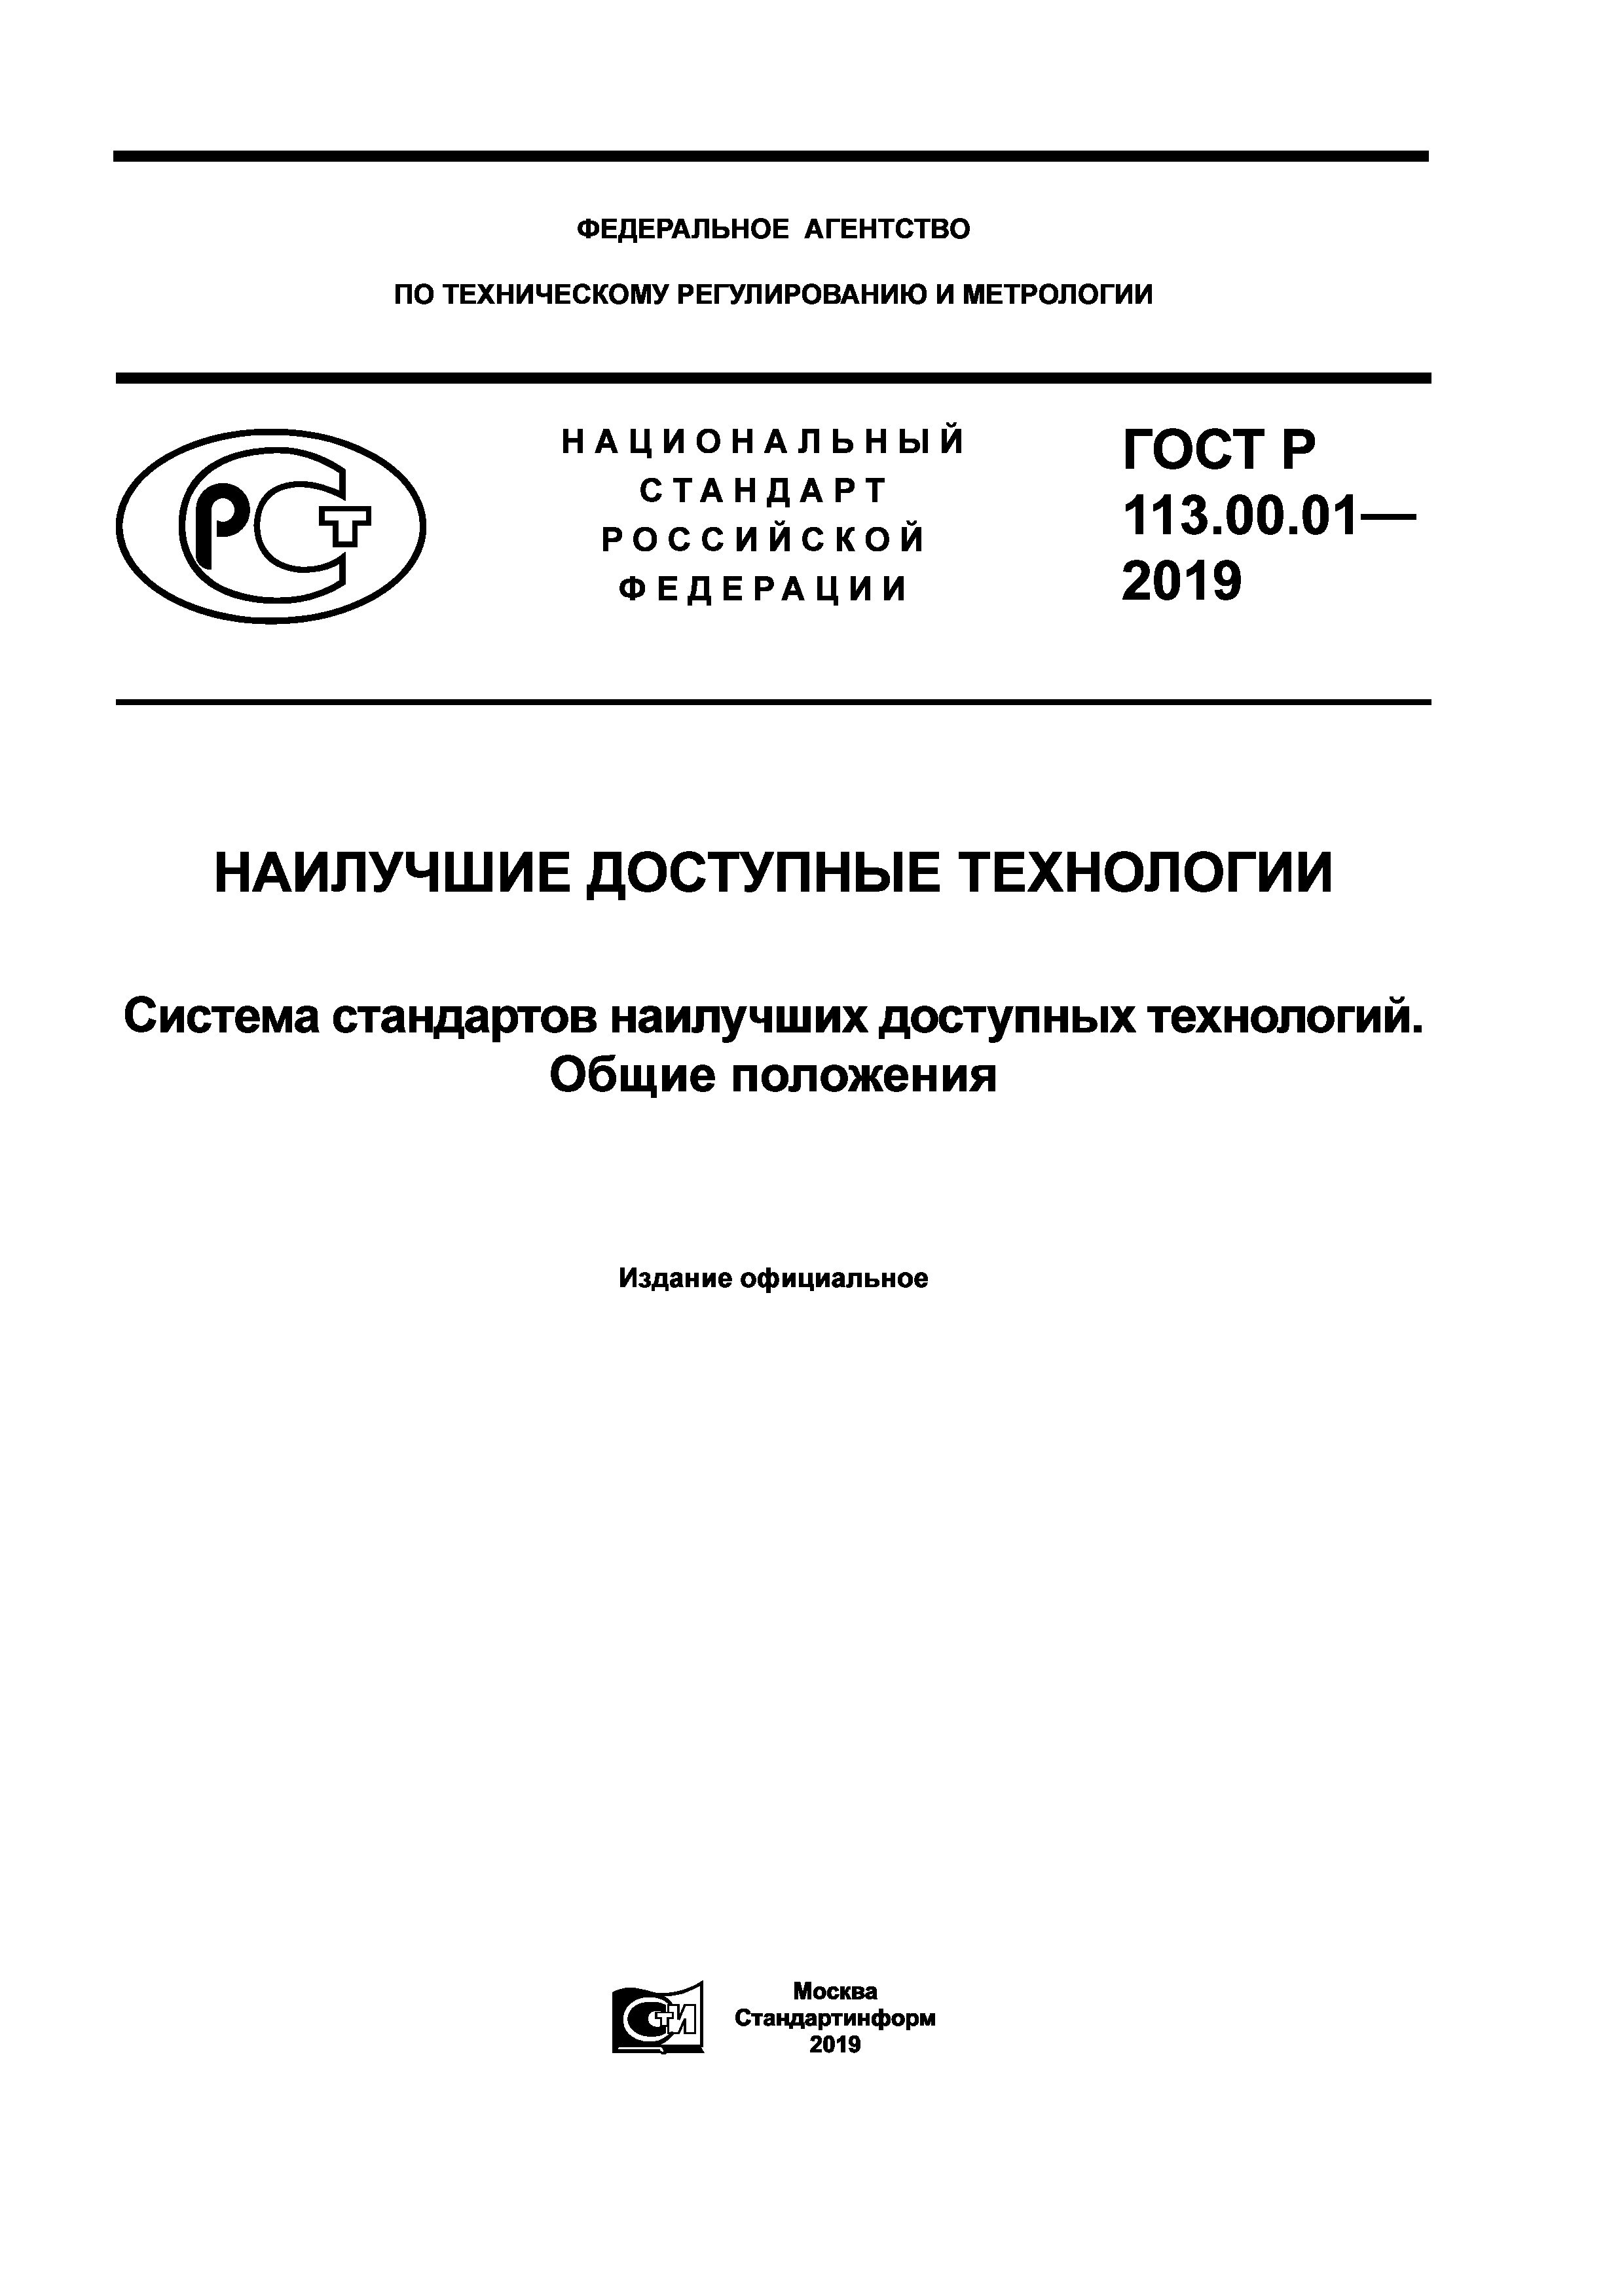 ГОСТ Р 113.00.01-2019